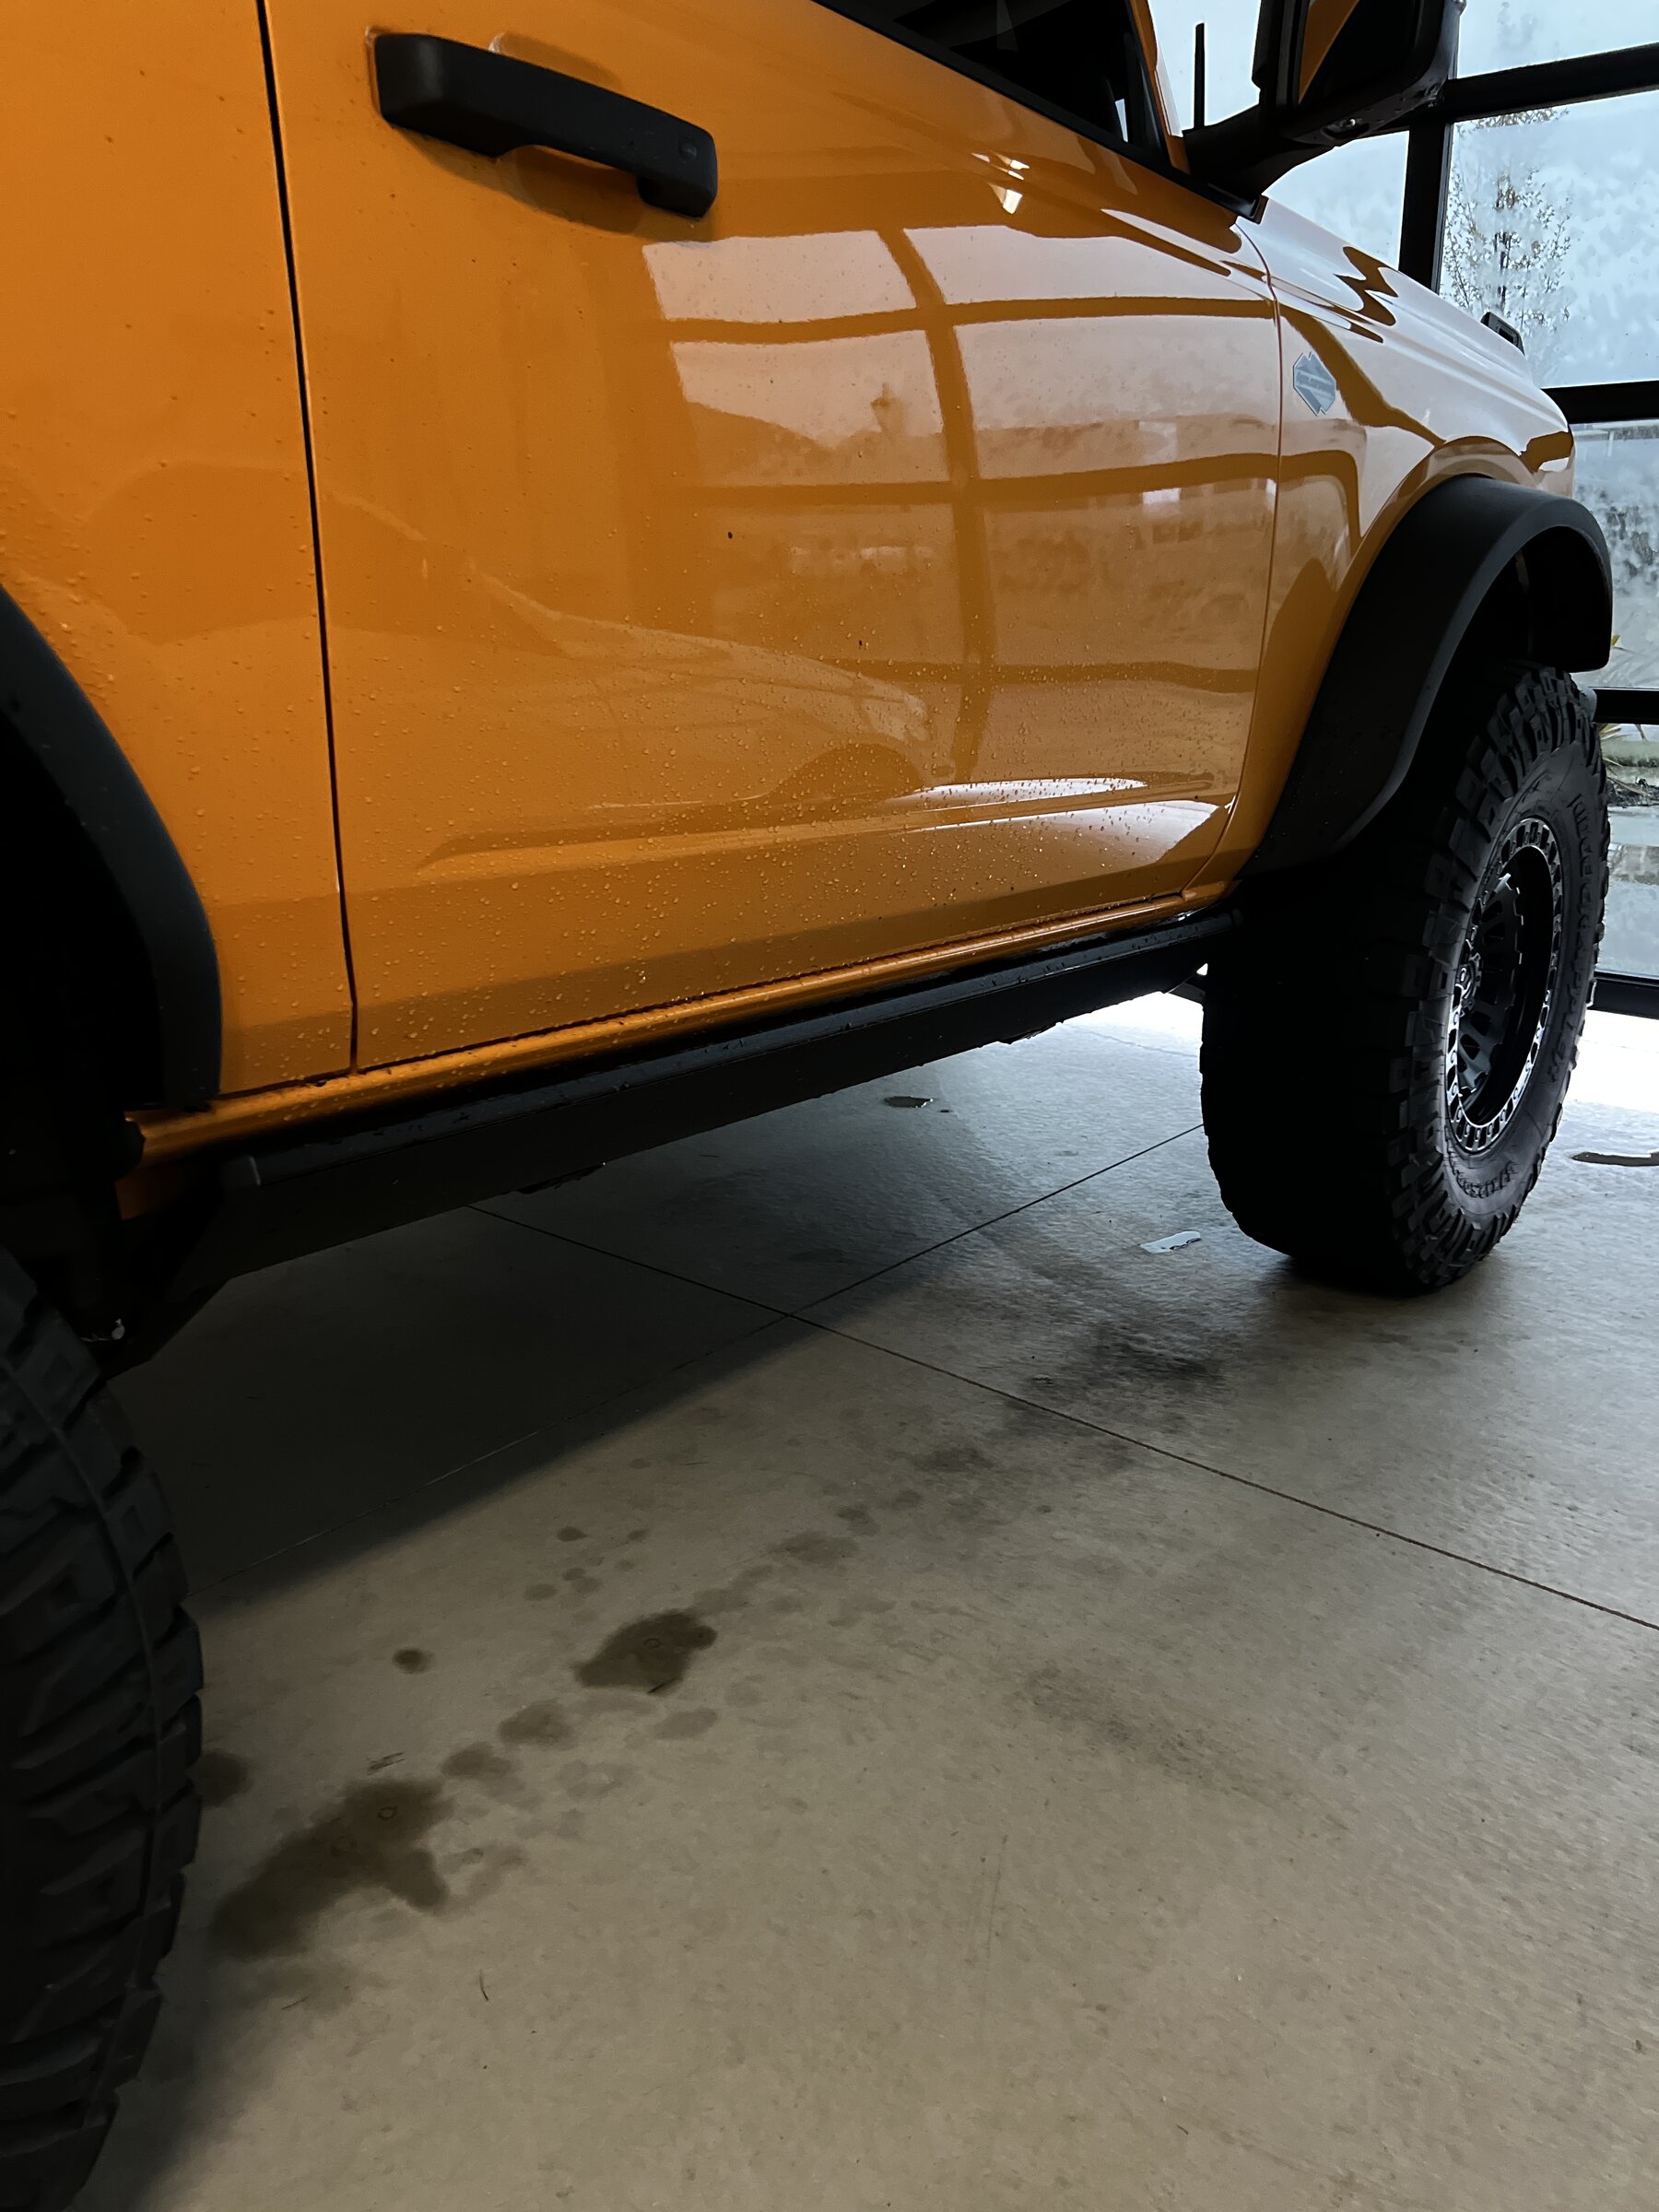 Ford Bronco 2022 2Dr Wildtrak Cyber Orange on 37’s liftwheelstiresampsb.JPG